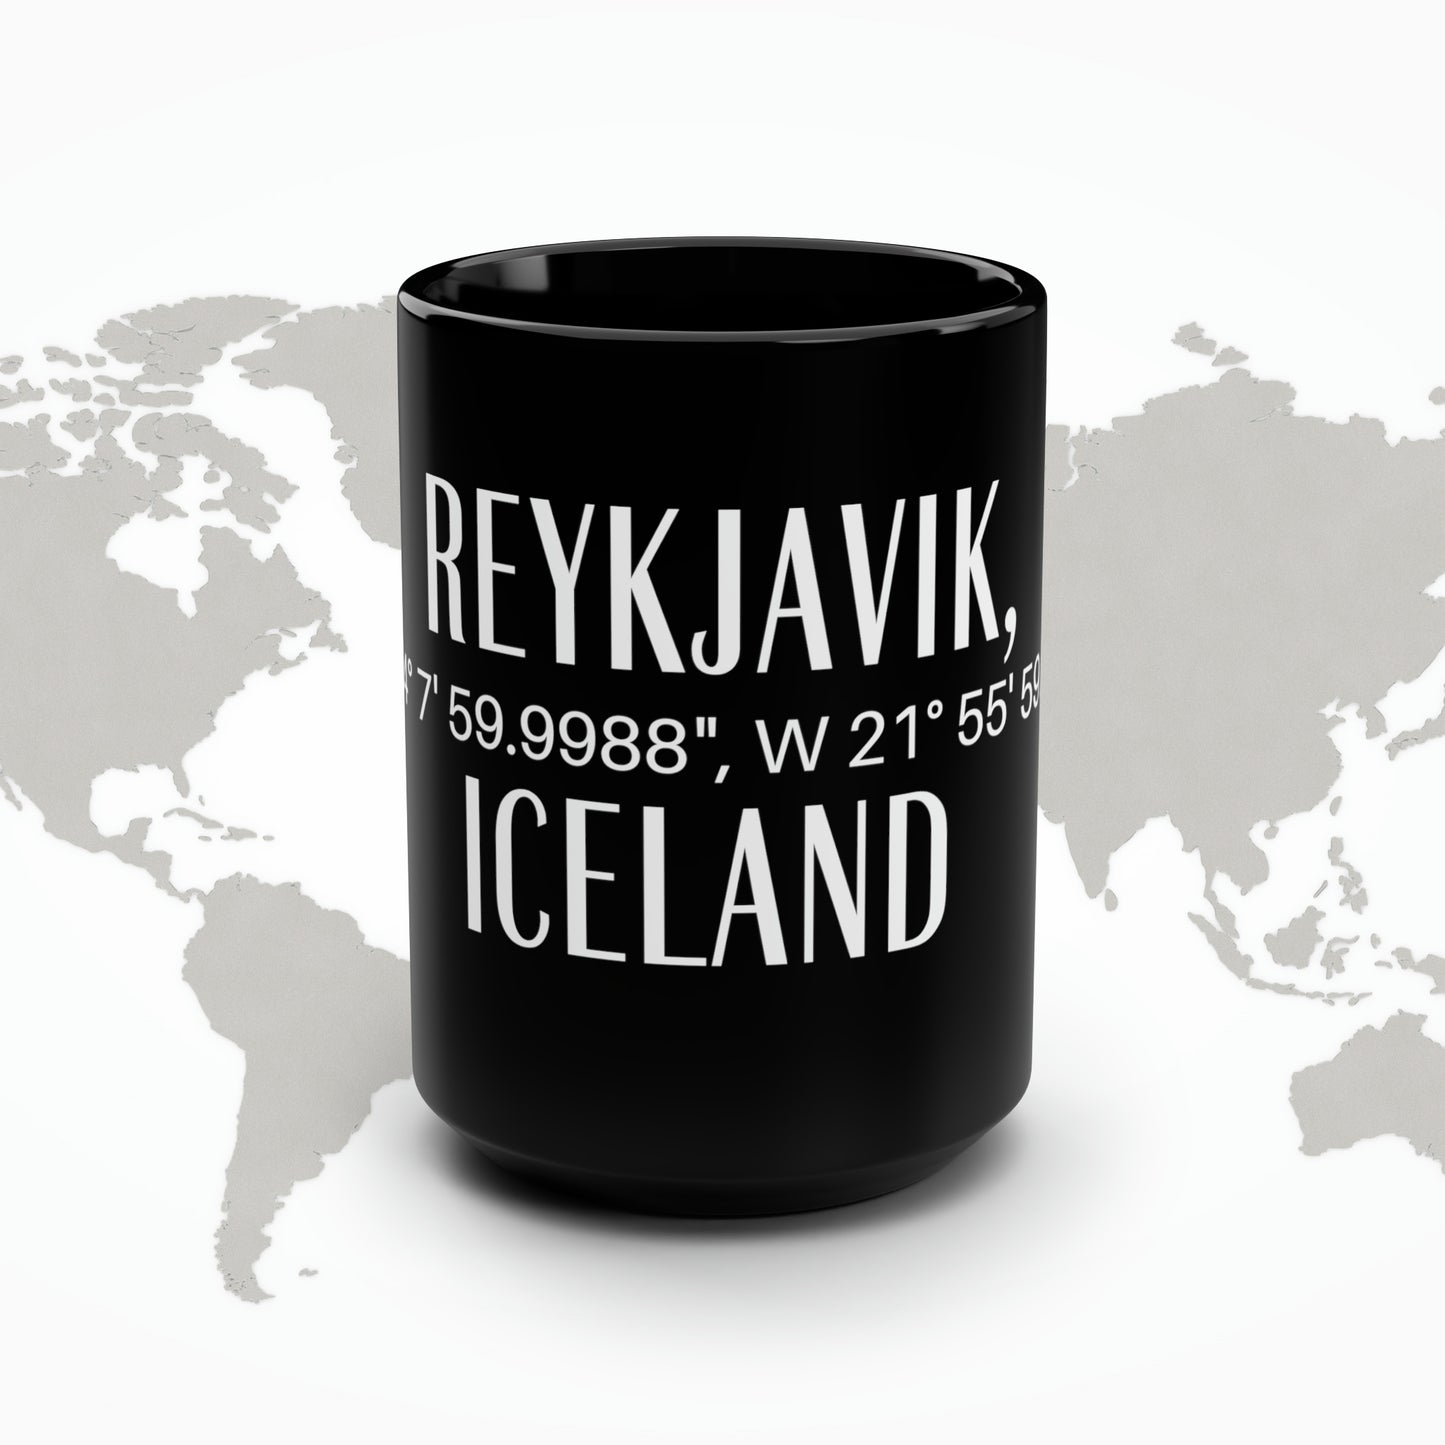 Reykjavik, Iceland Mug